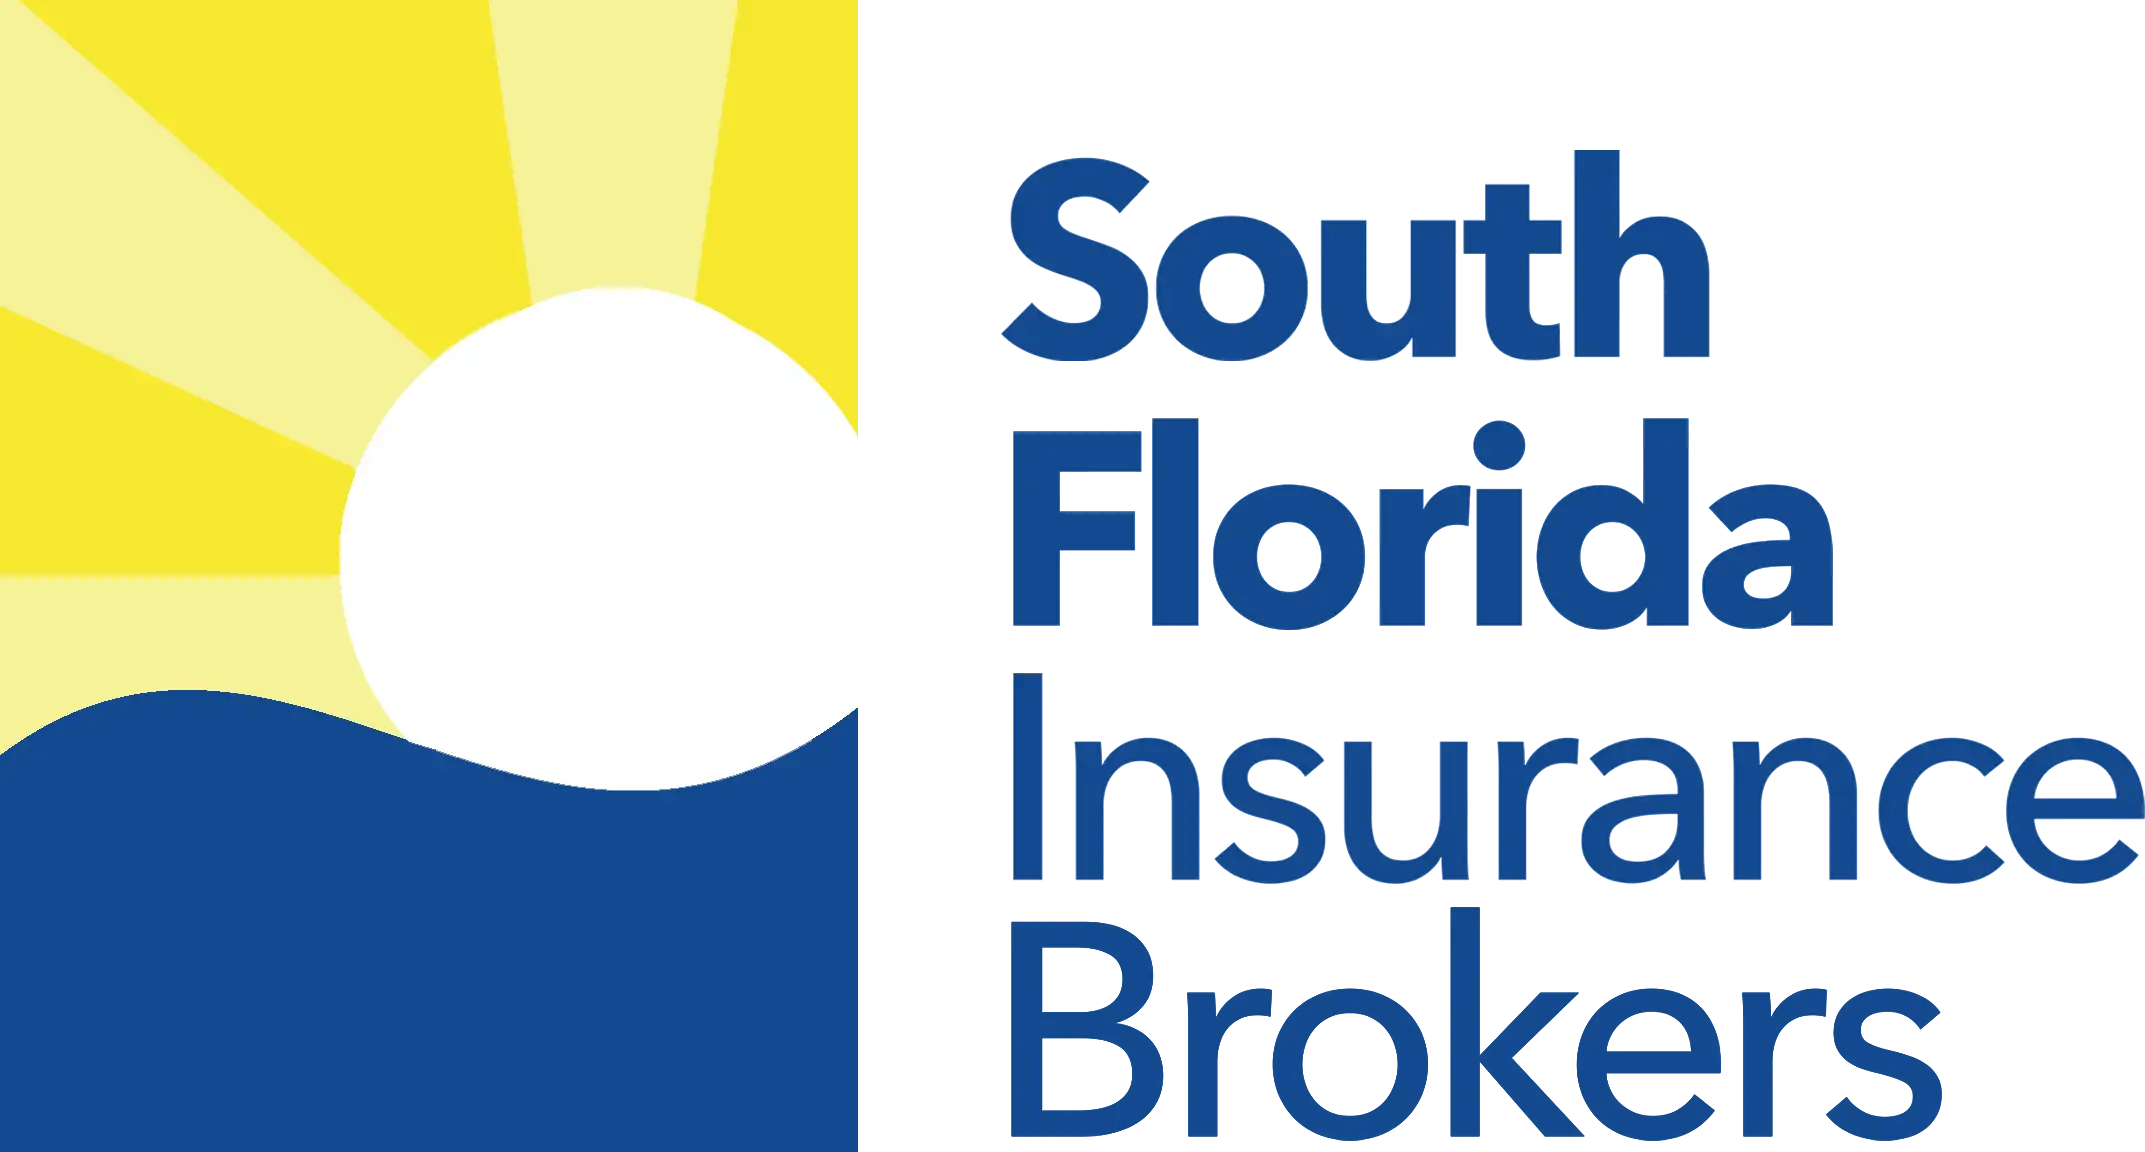 South Florida Insurance Brokers